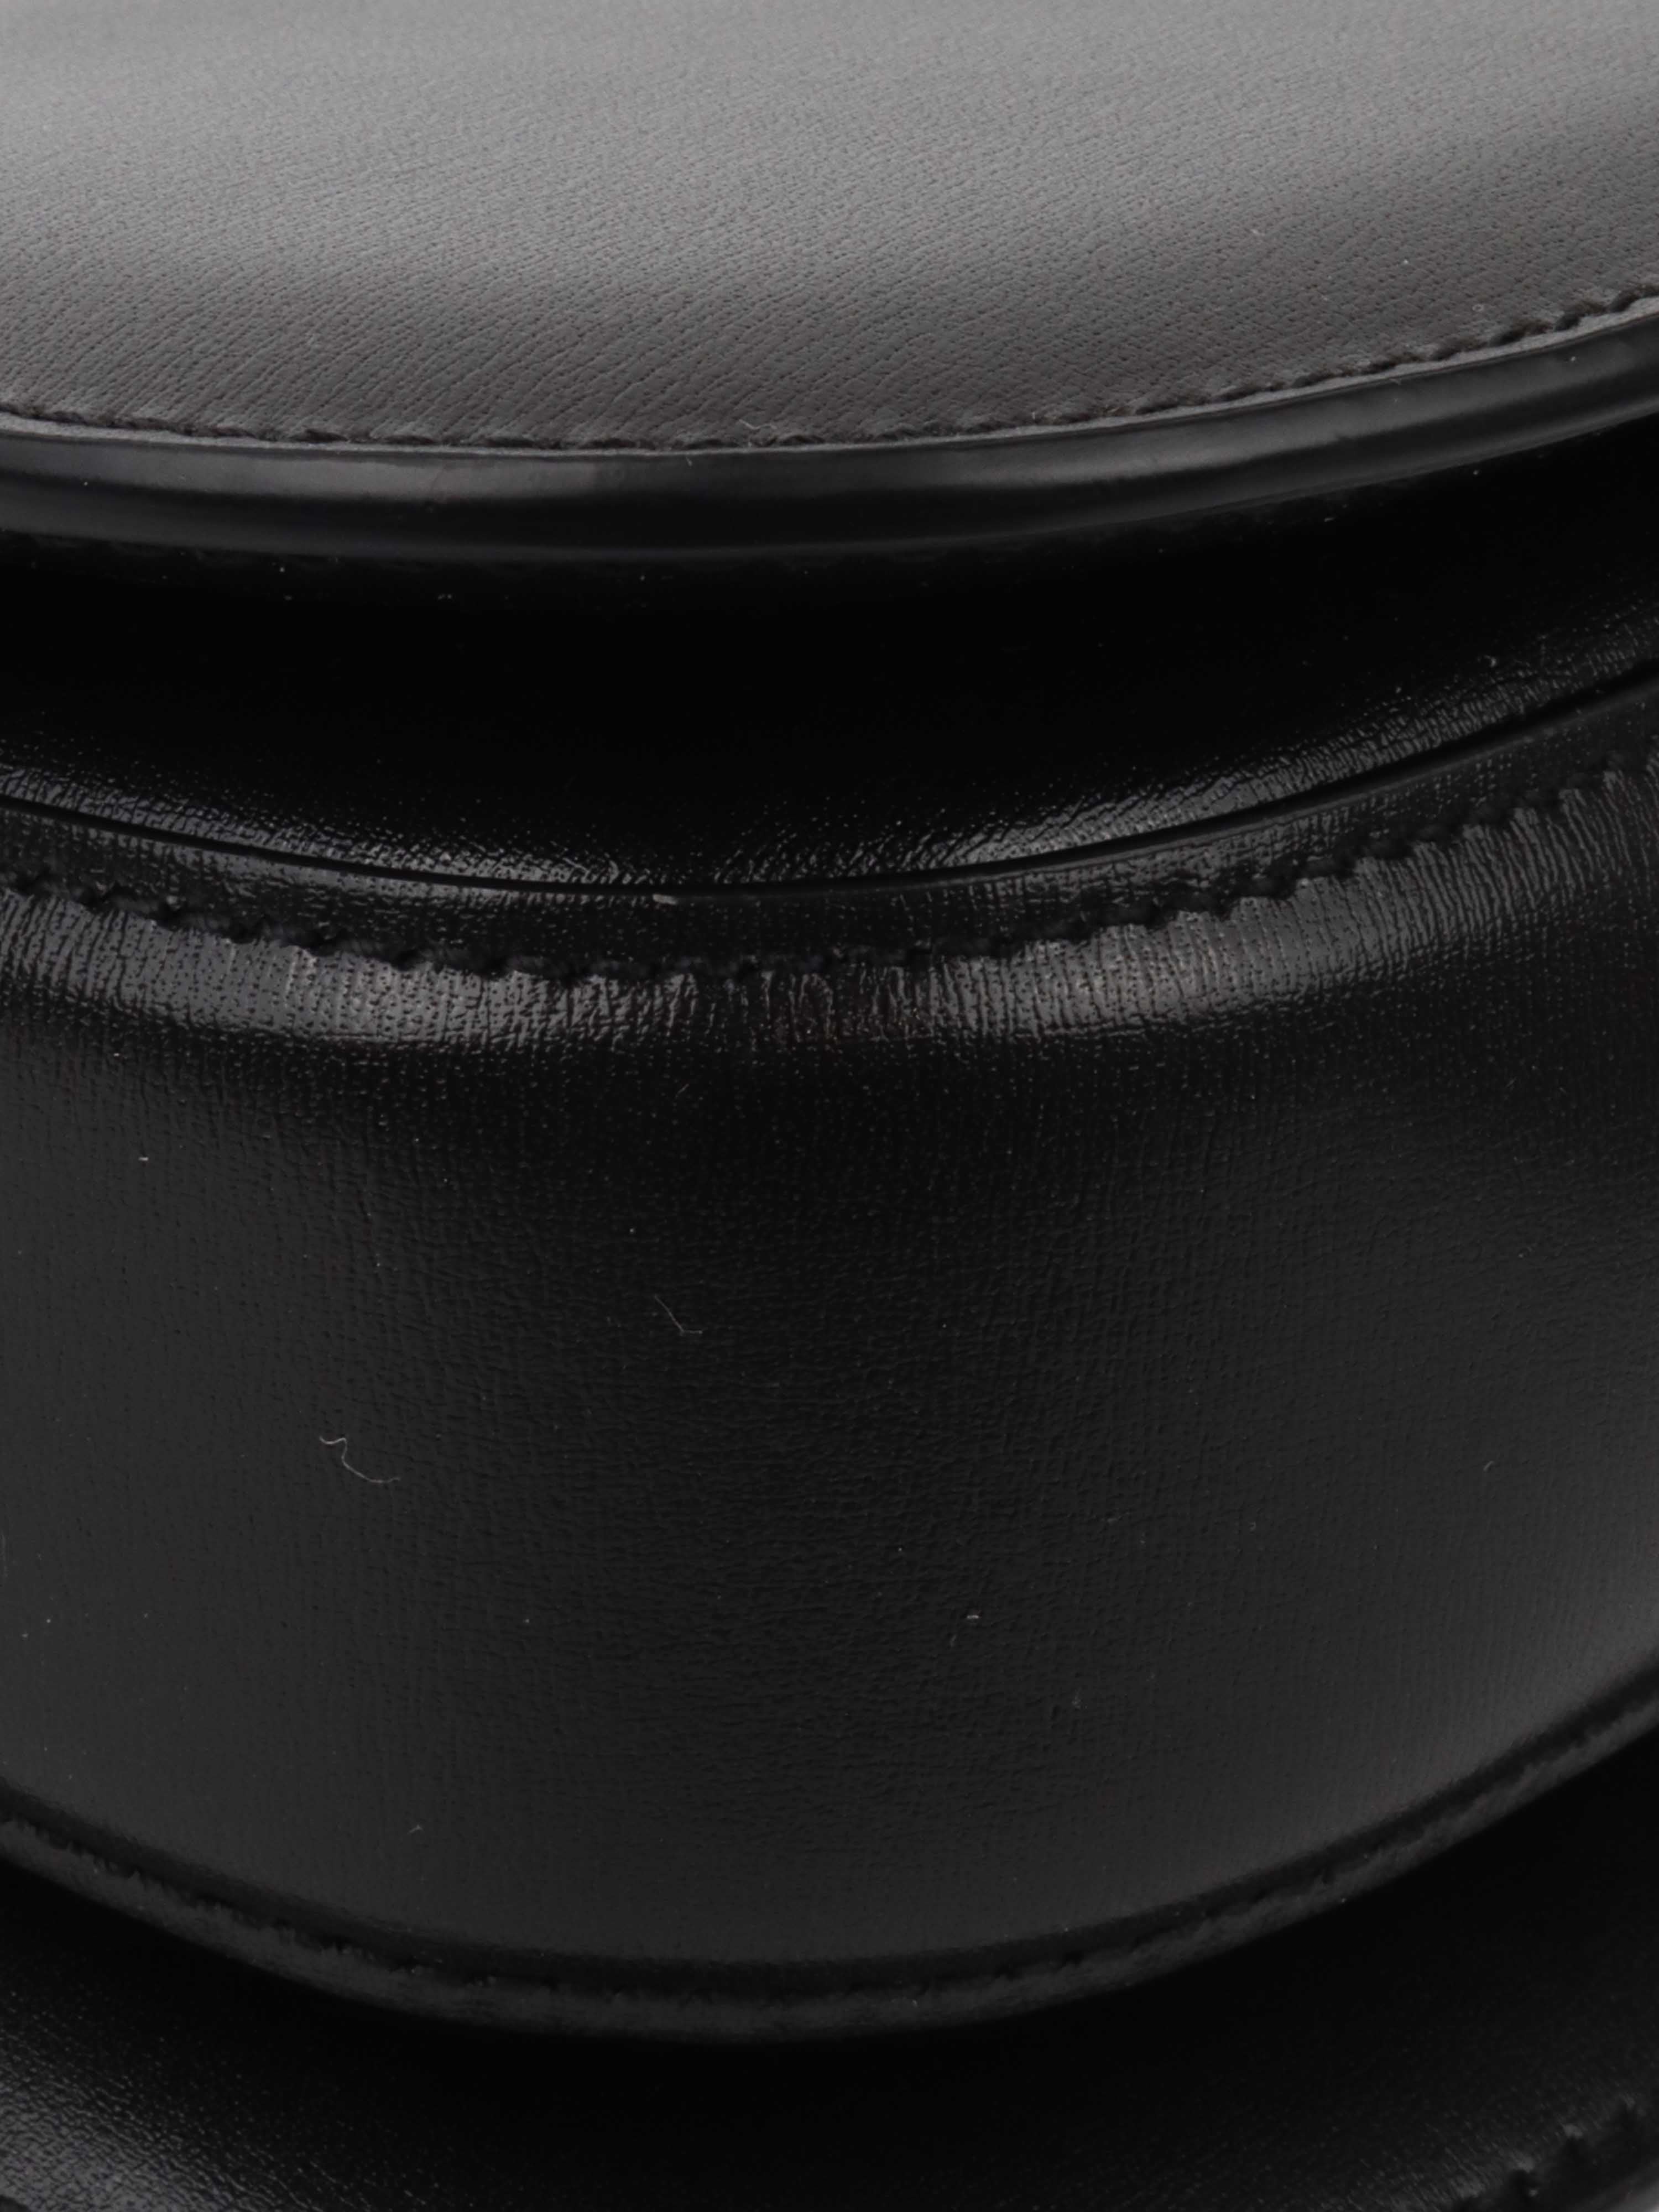 Gucci Bamboo 1947 Mini Top Handle Bag Black.